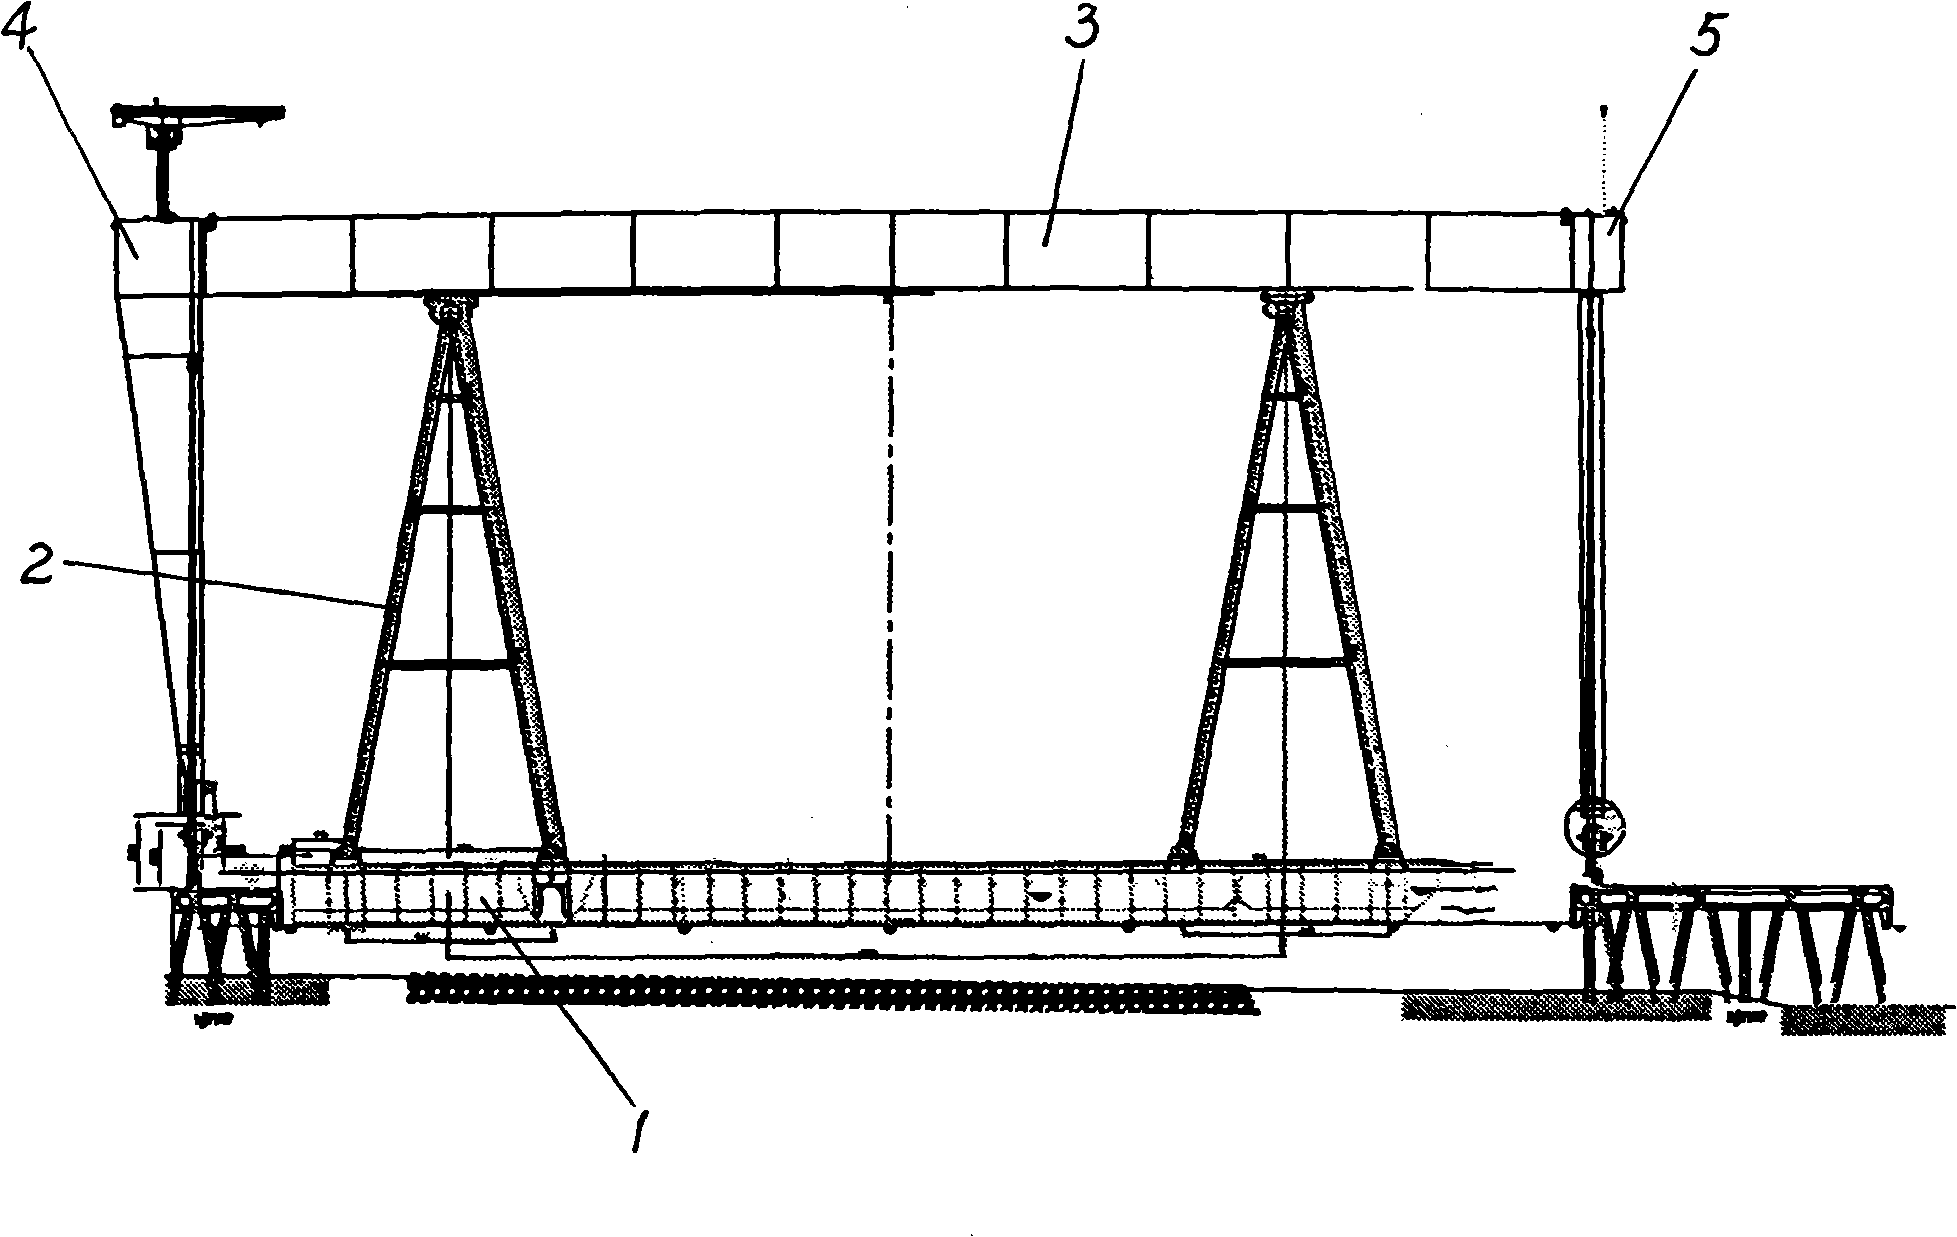 Method for discharging boat to dock basin with dock yard trestle crane set